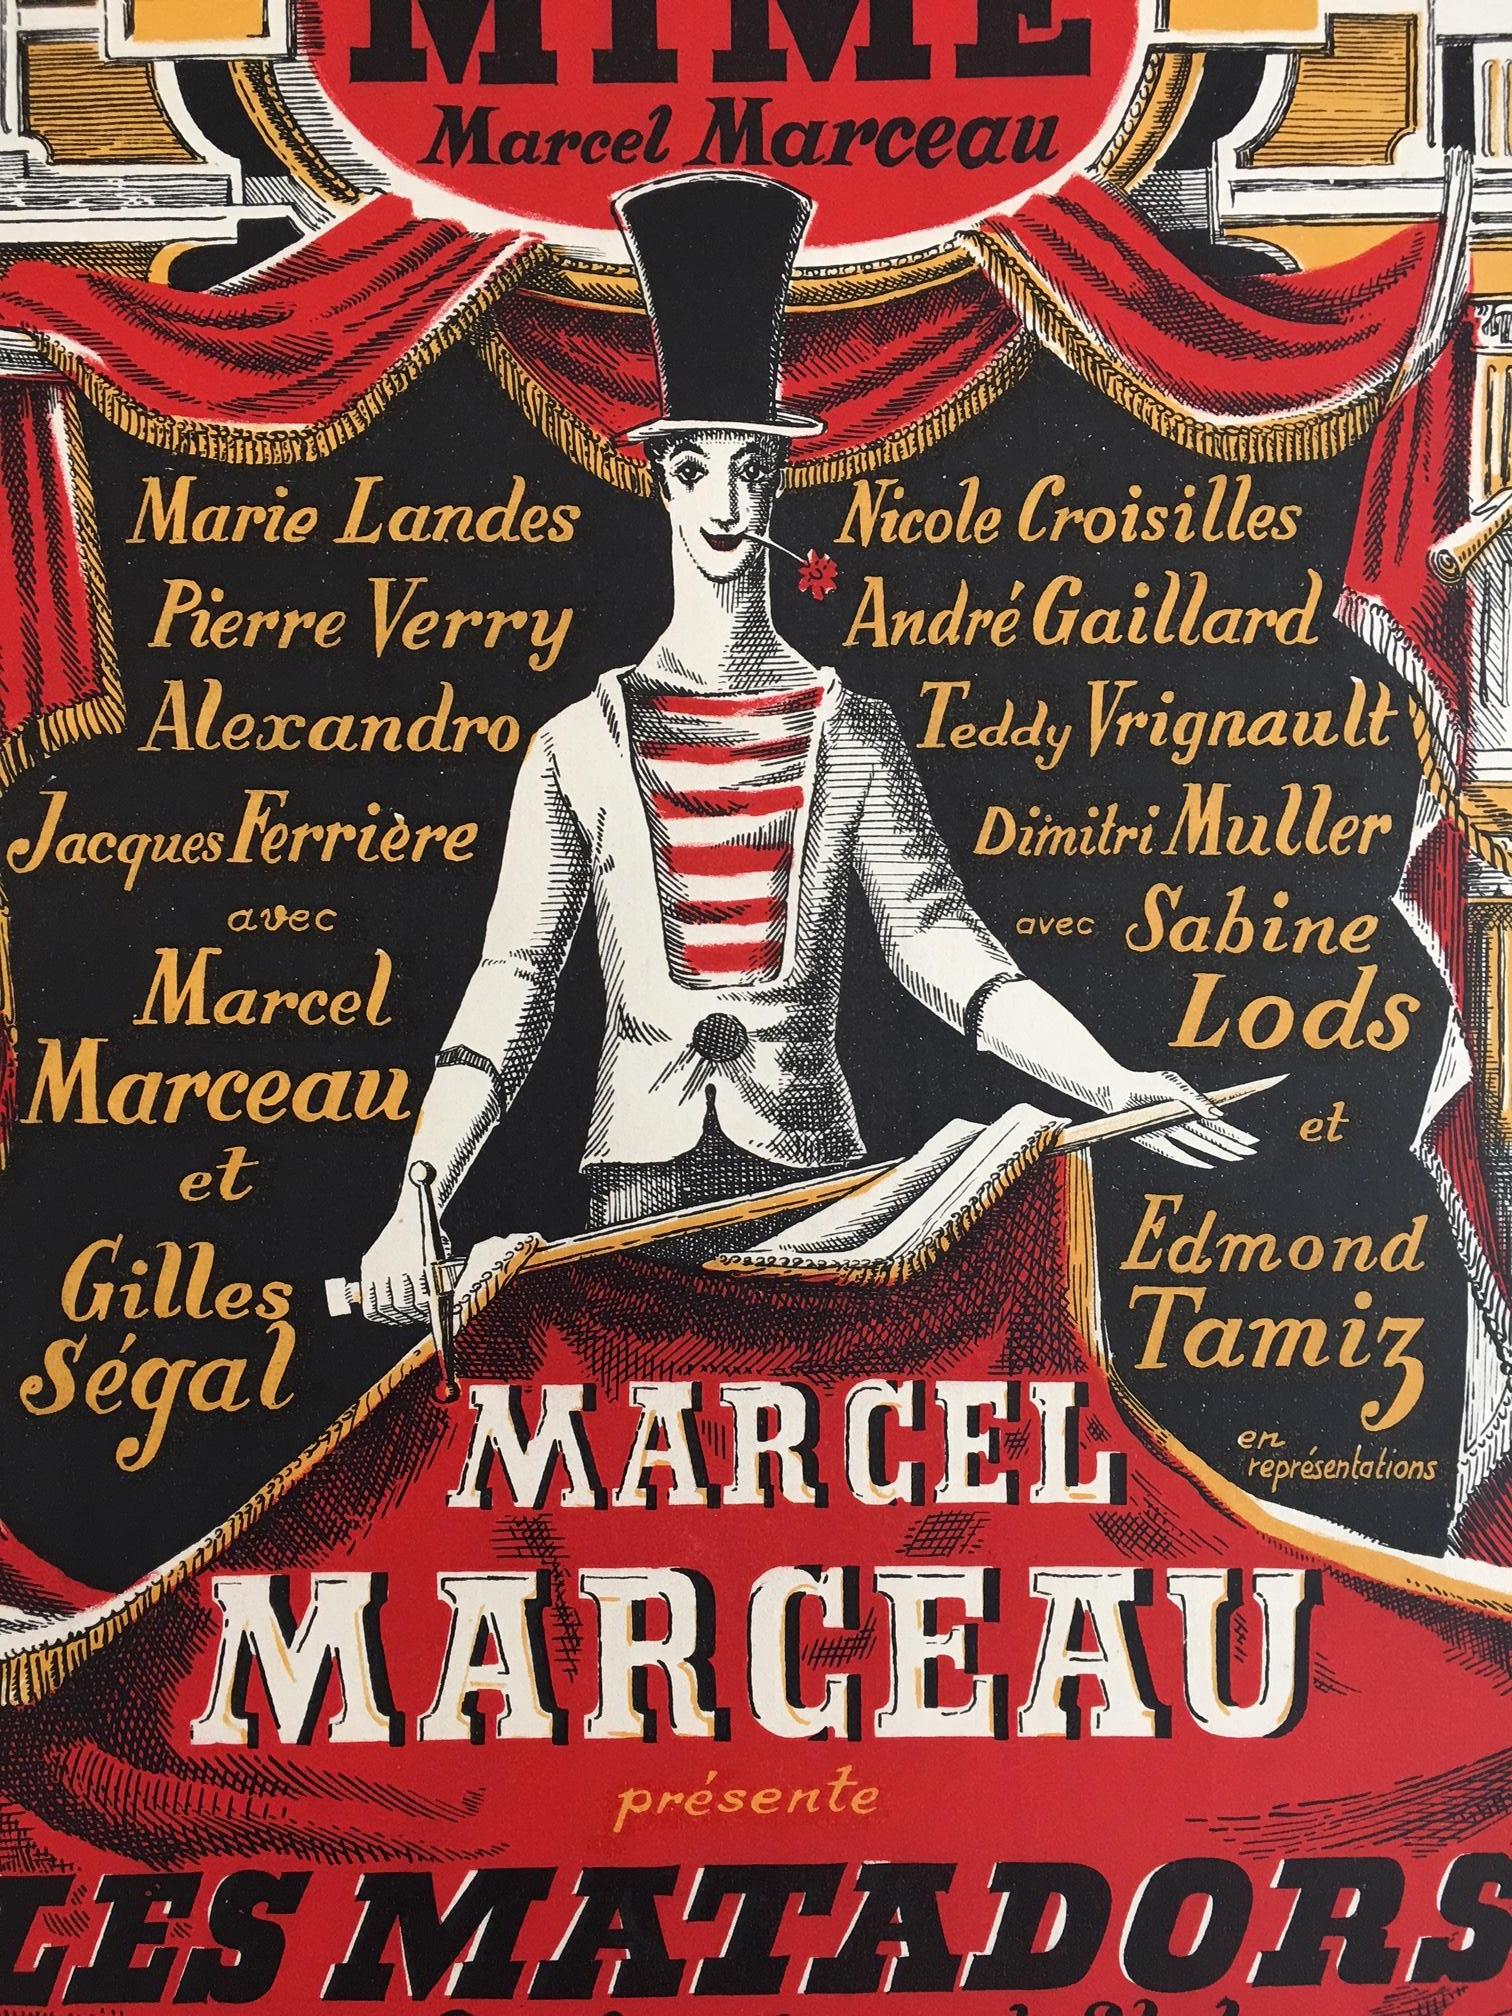 Marcel Marceau legendary mime POSTER 